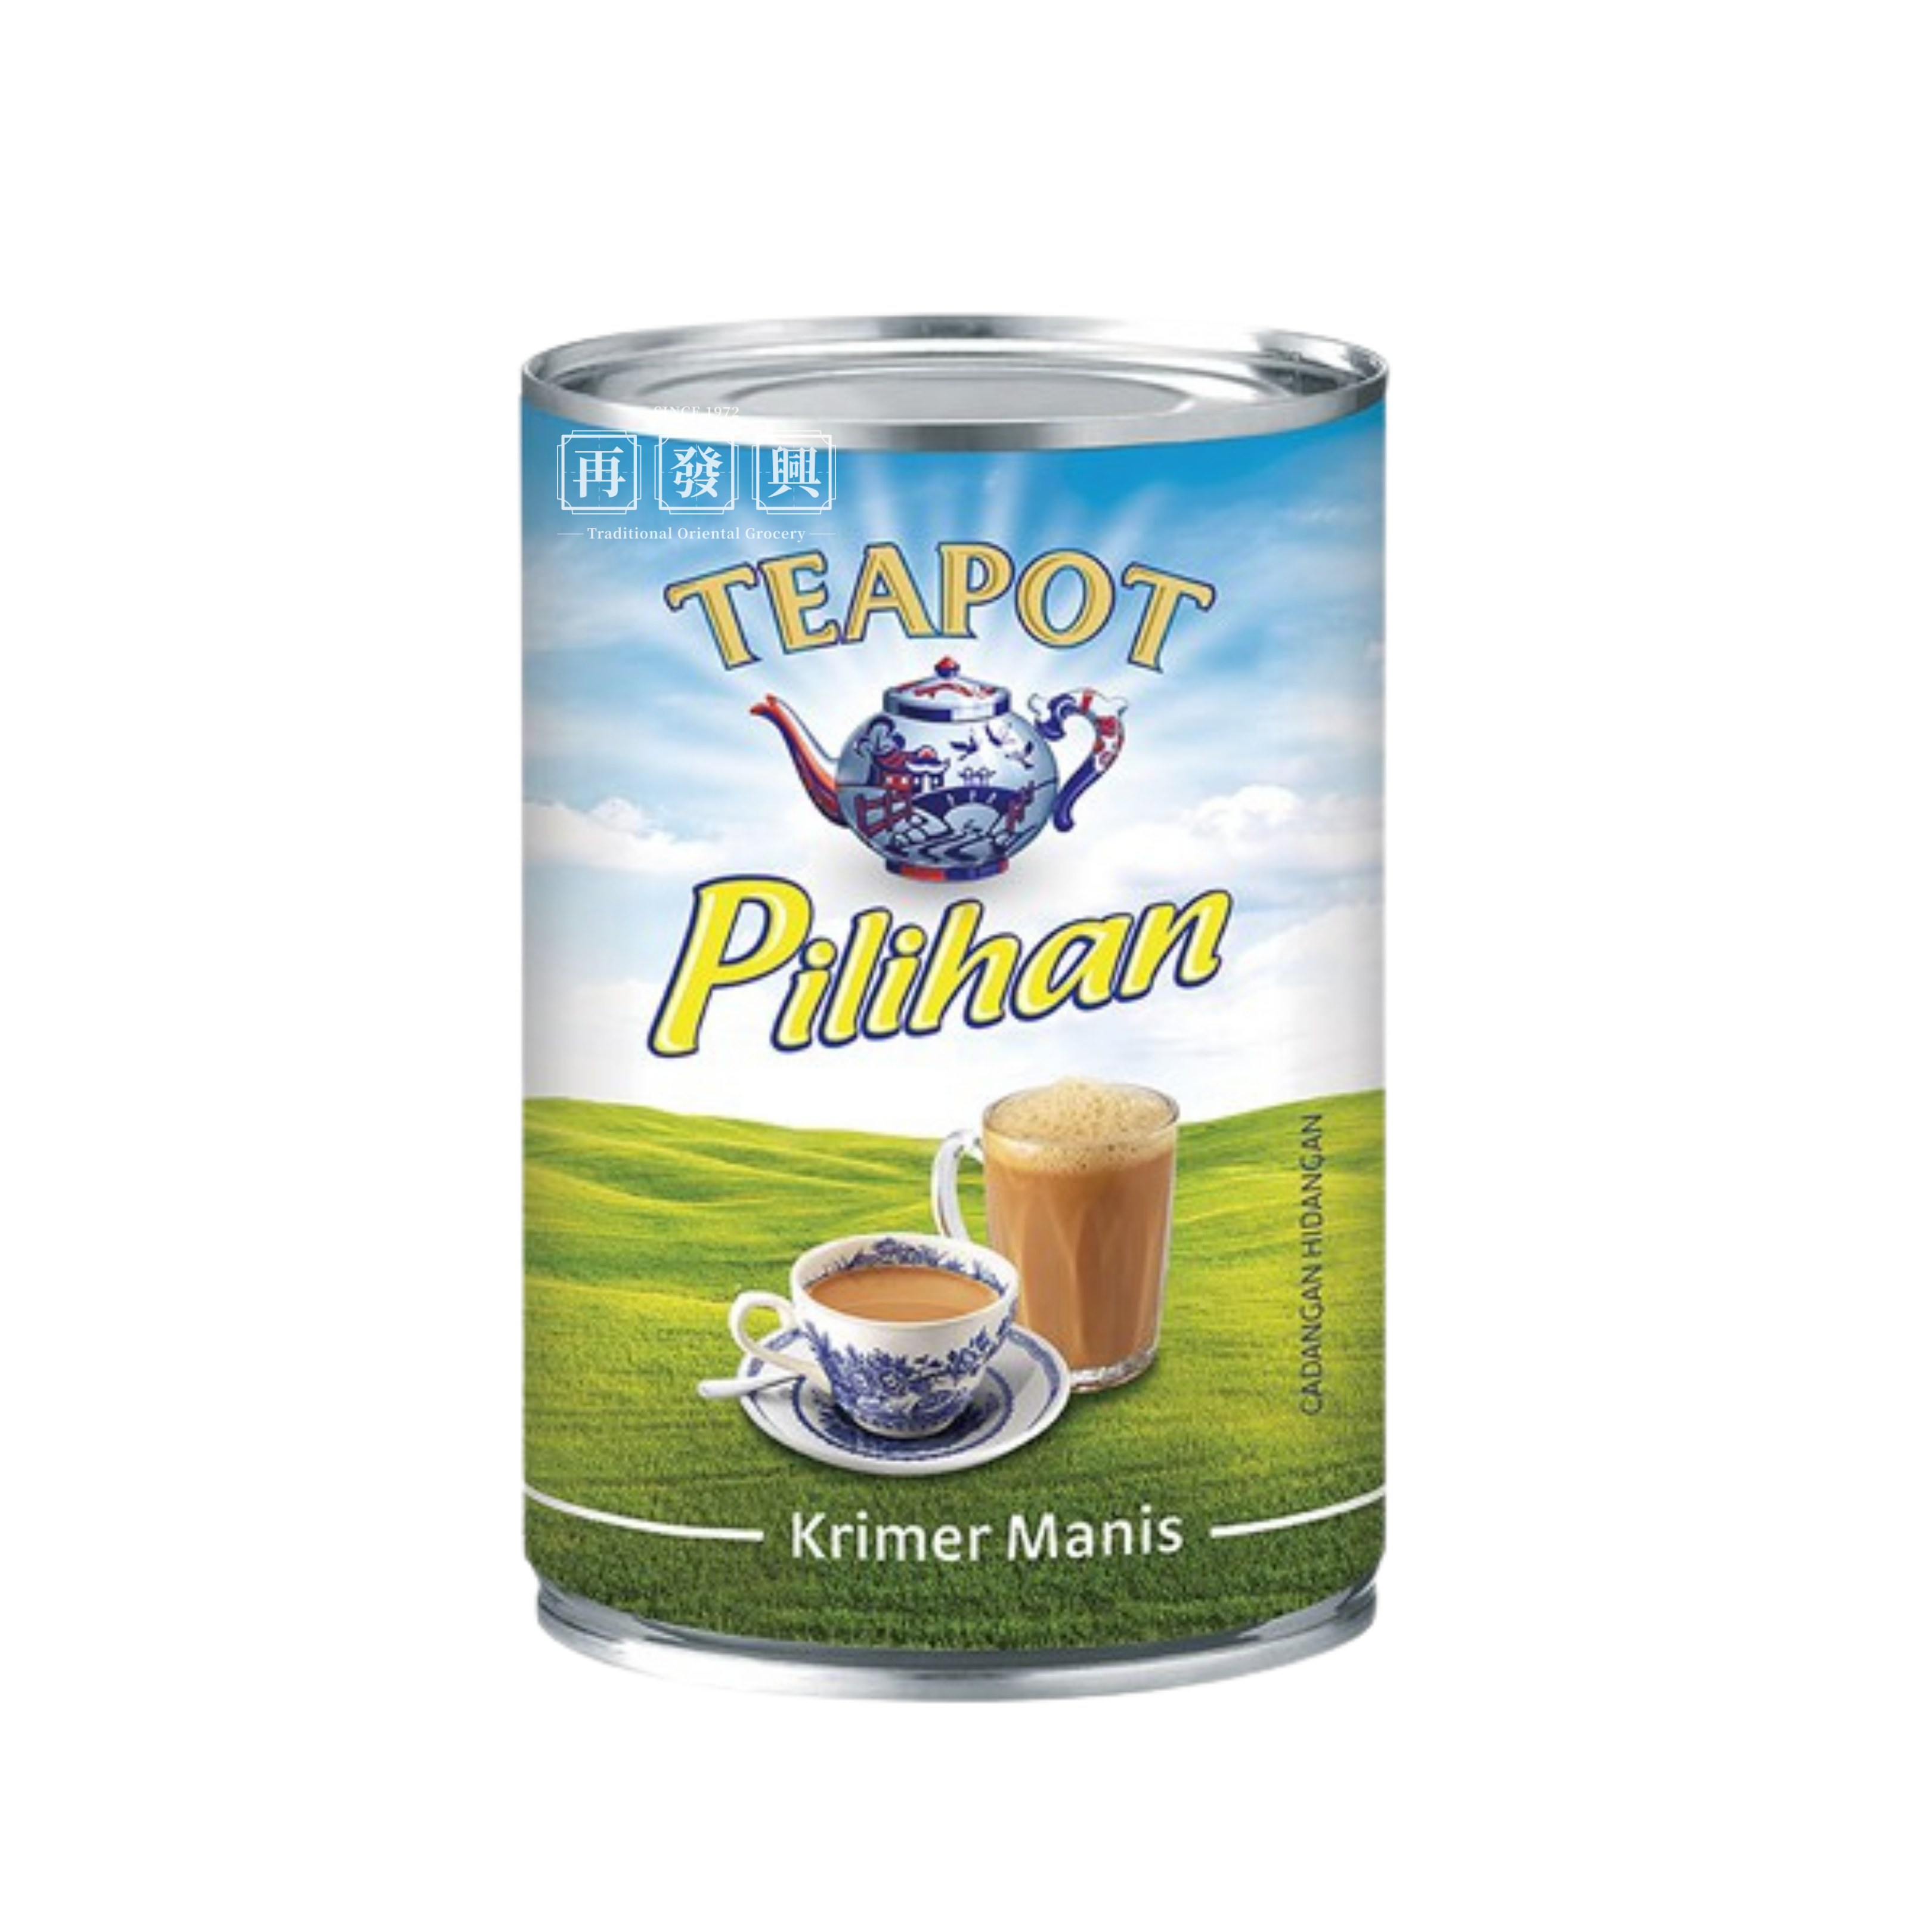 Teapot Pilihan (Krimer Manis) 500g